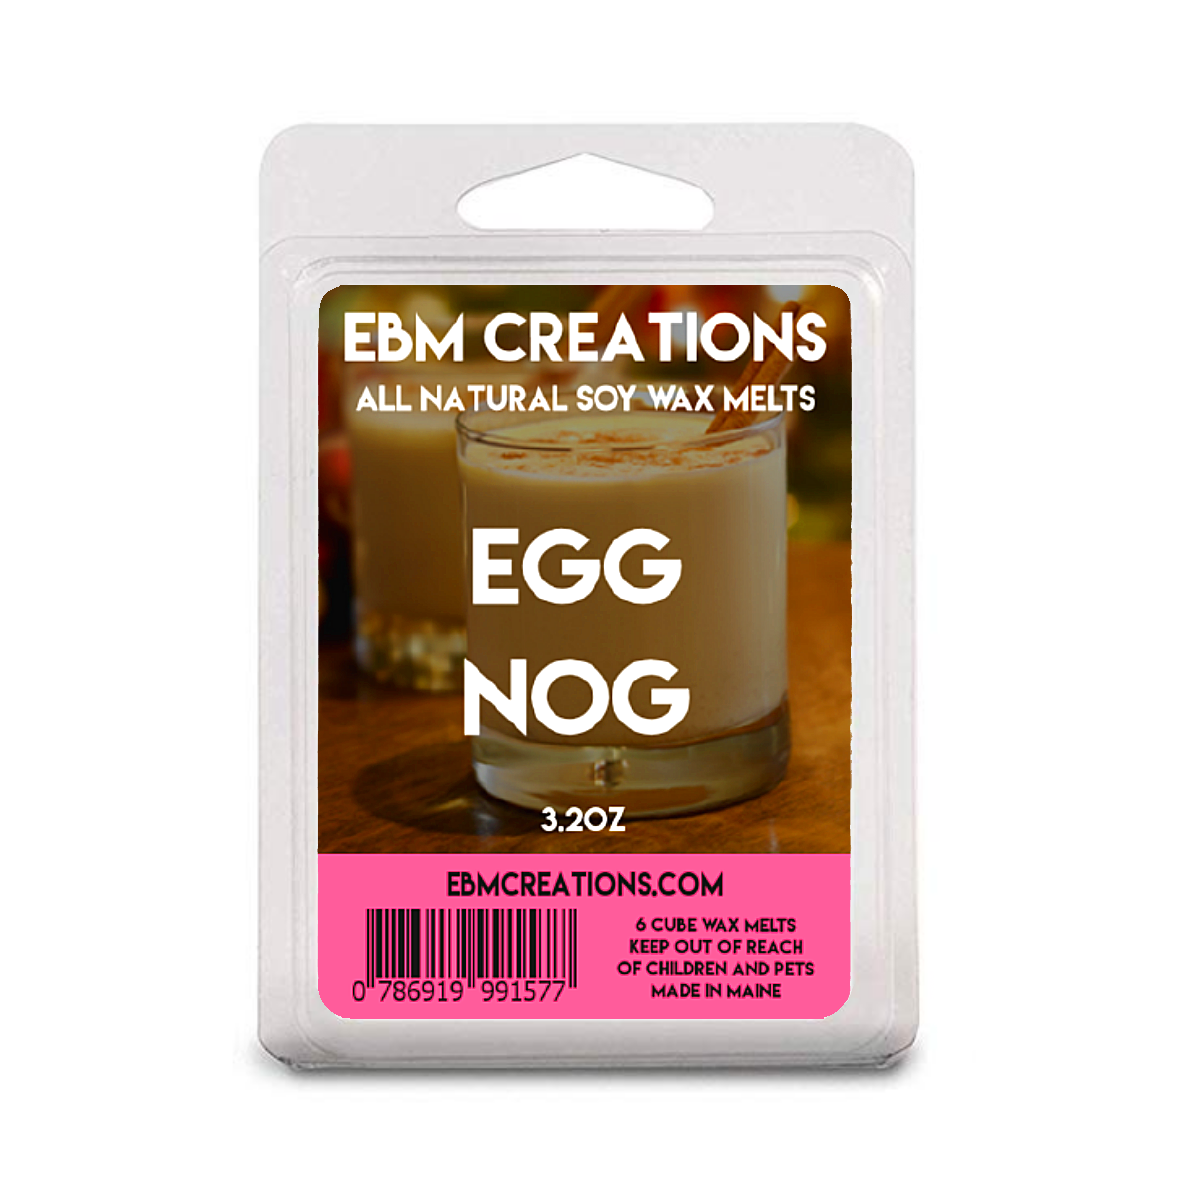 Eggnog - 3.2 oz Clamshell